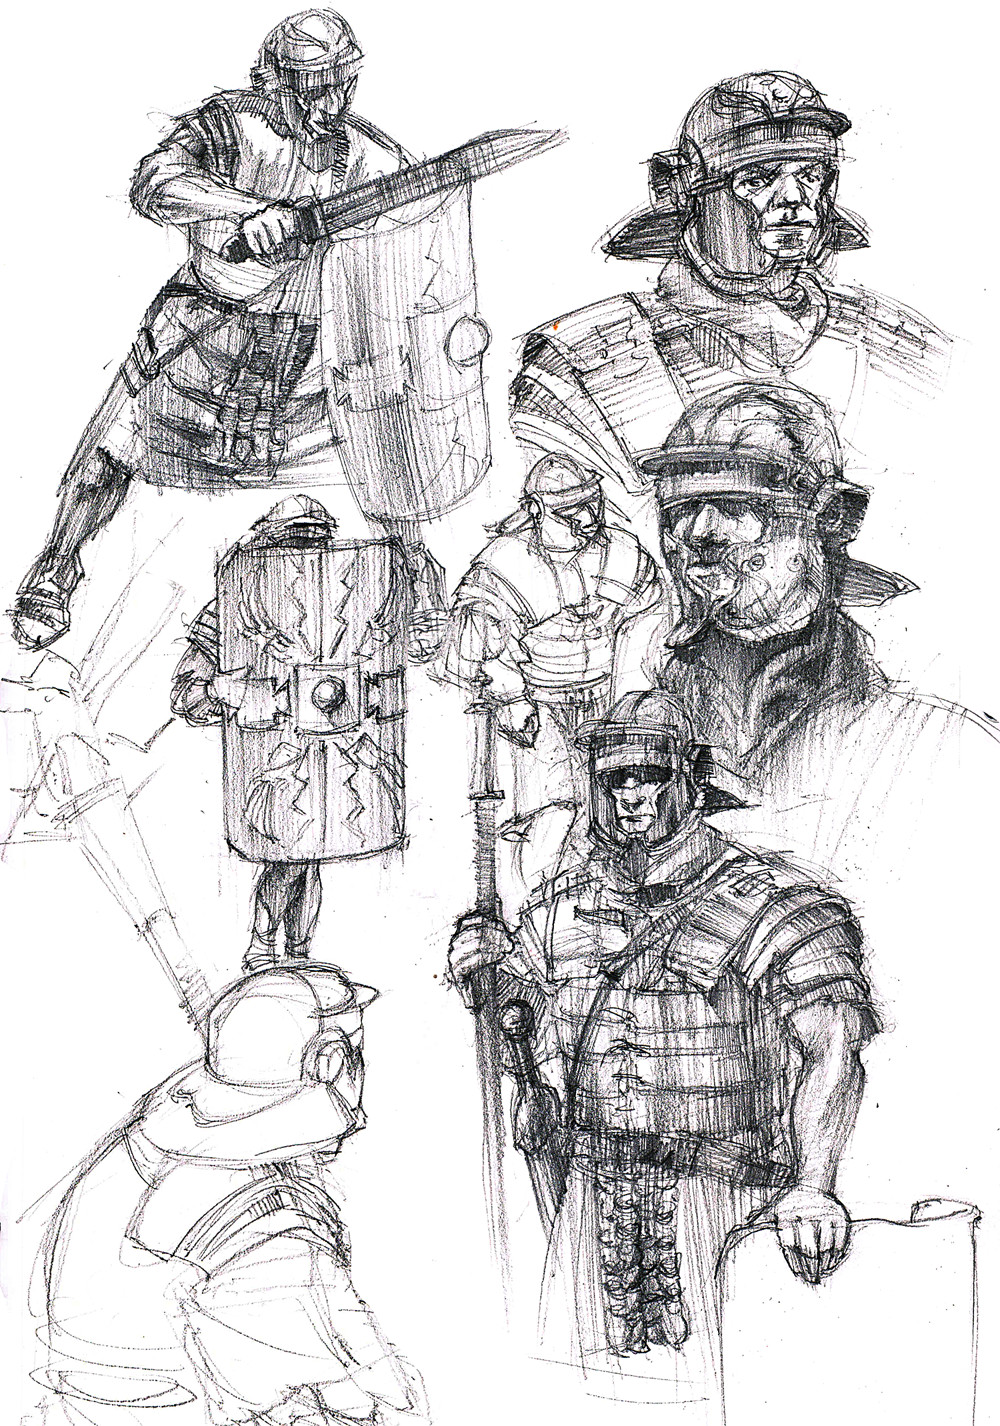 ArtStation - Roman Soldier sketches, Jacek Ogonowski